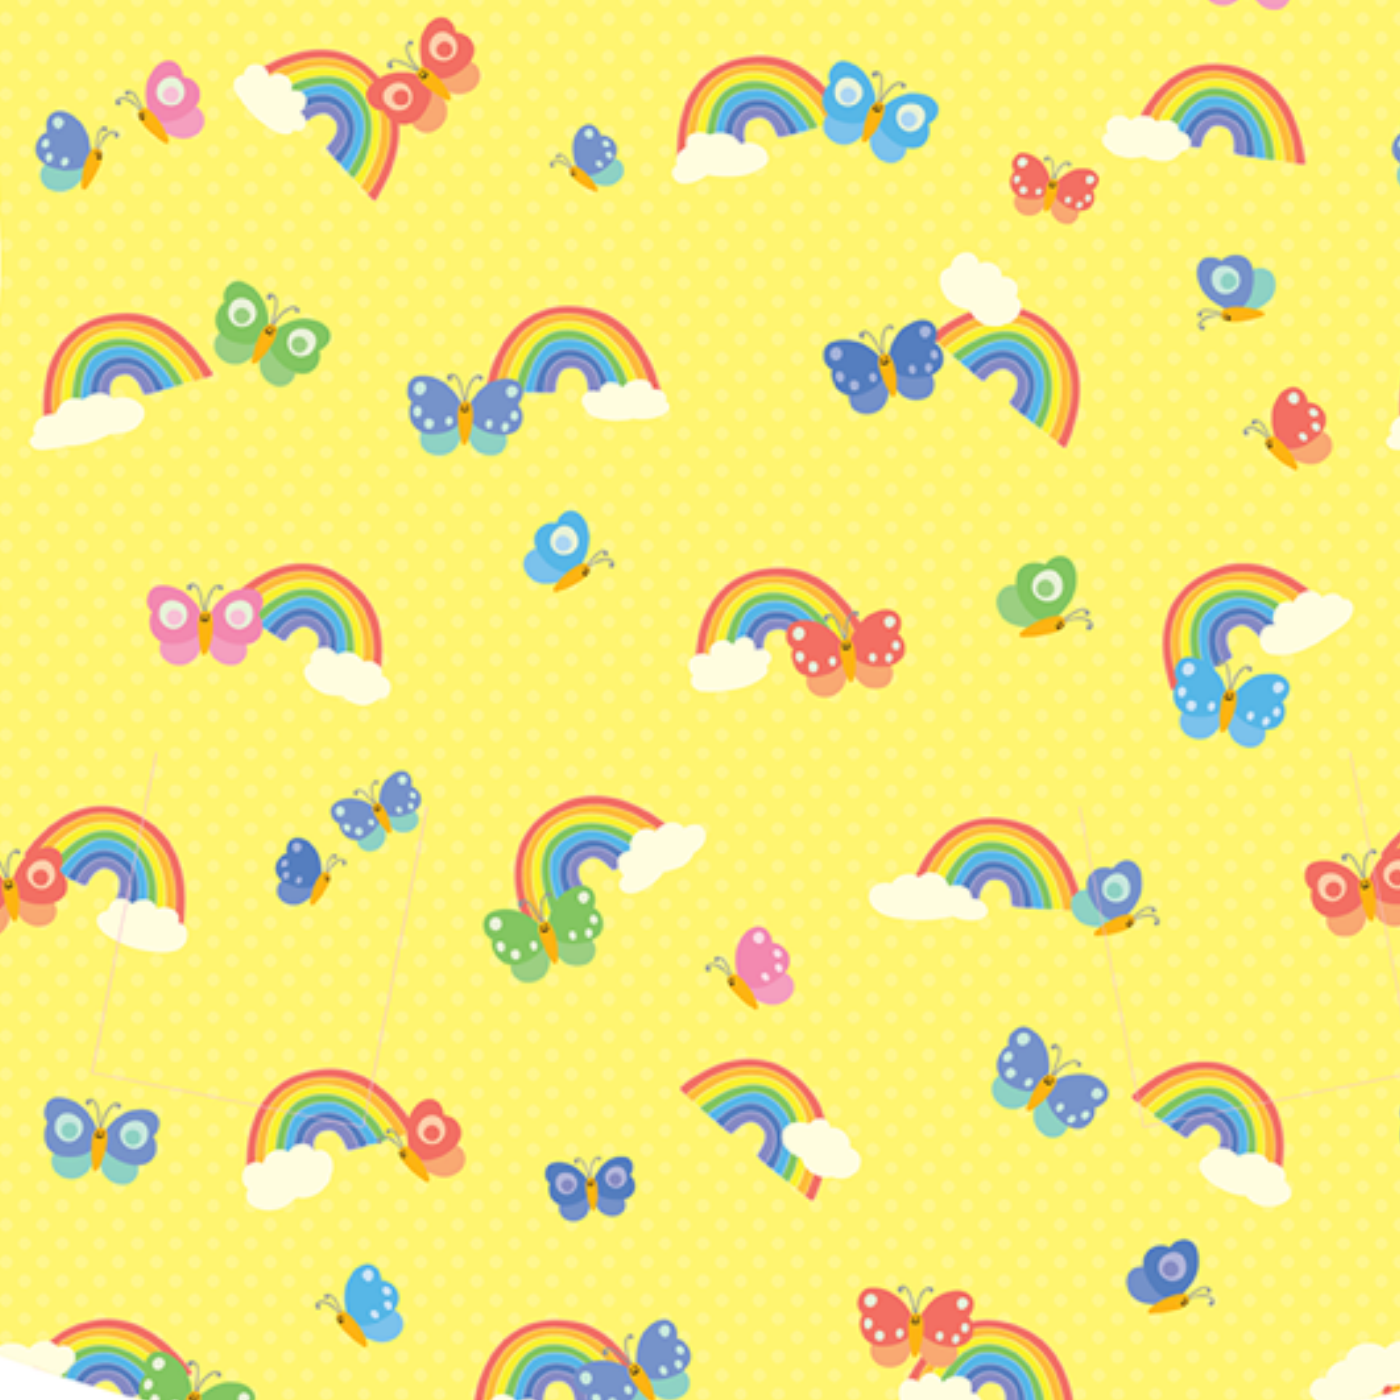 Sunshine-Yellow-Polka-Dot-Butterfly-Rainbows-Clouds-Vintage-Inspired-Kitsch-RainbowsAndFairies.com.au-SUNSH_ORG-01